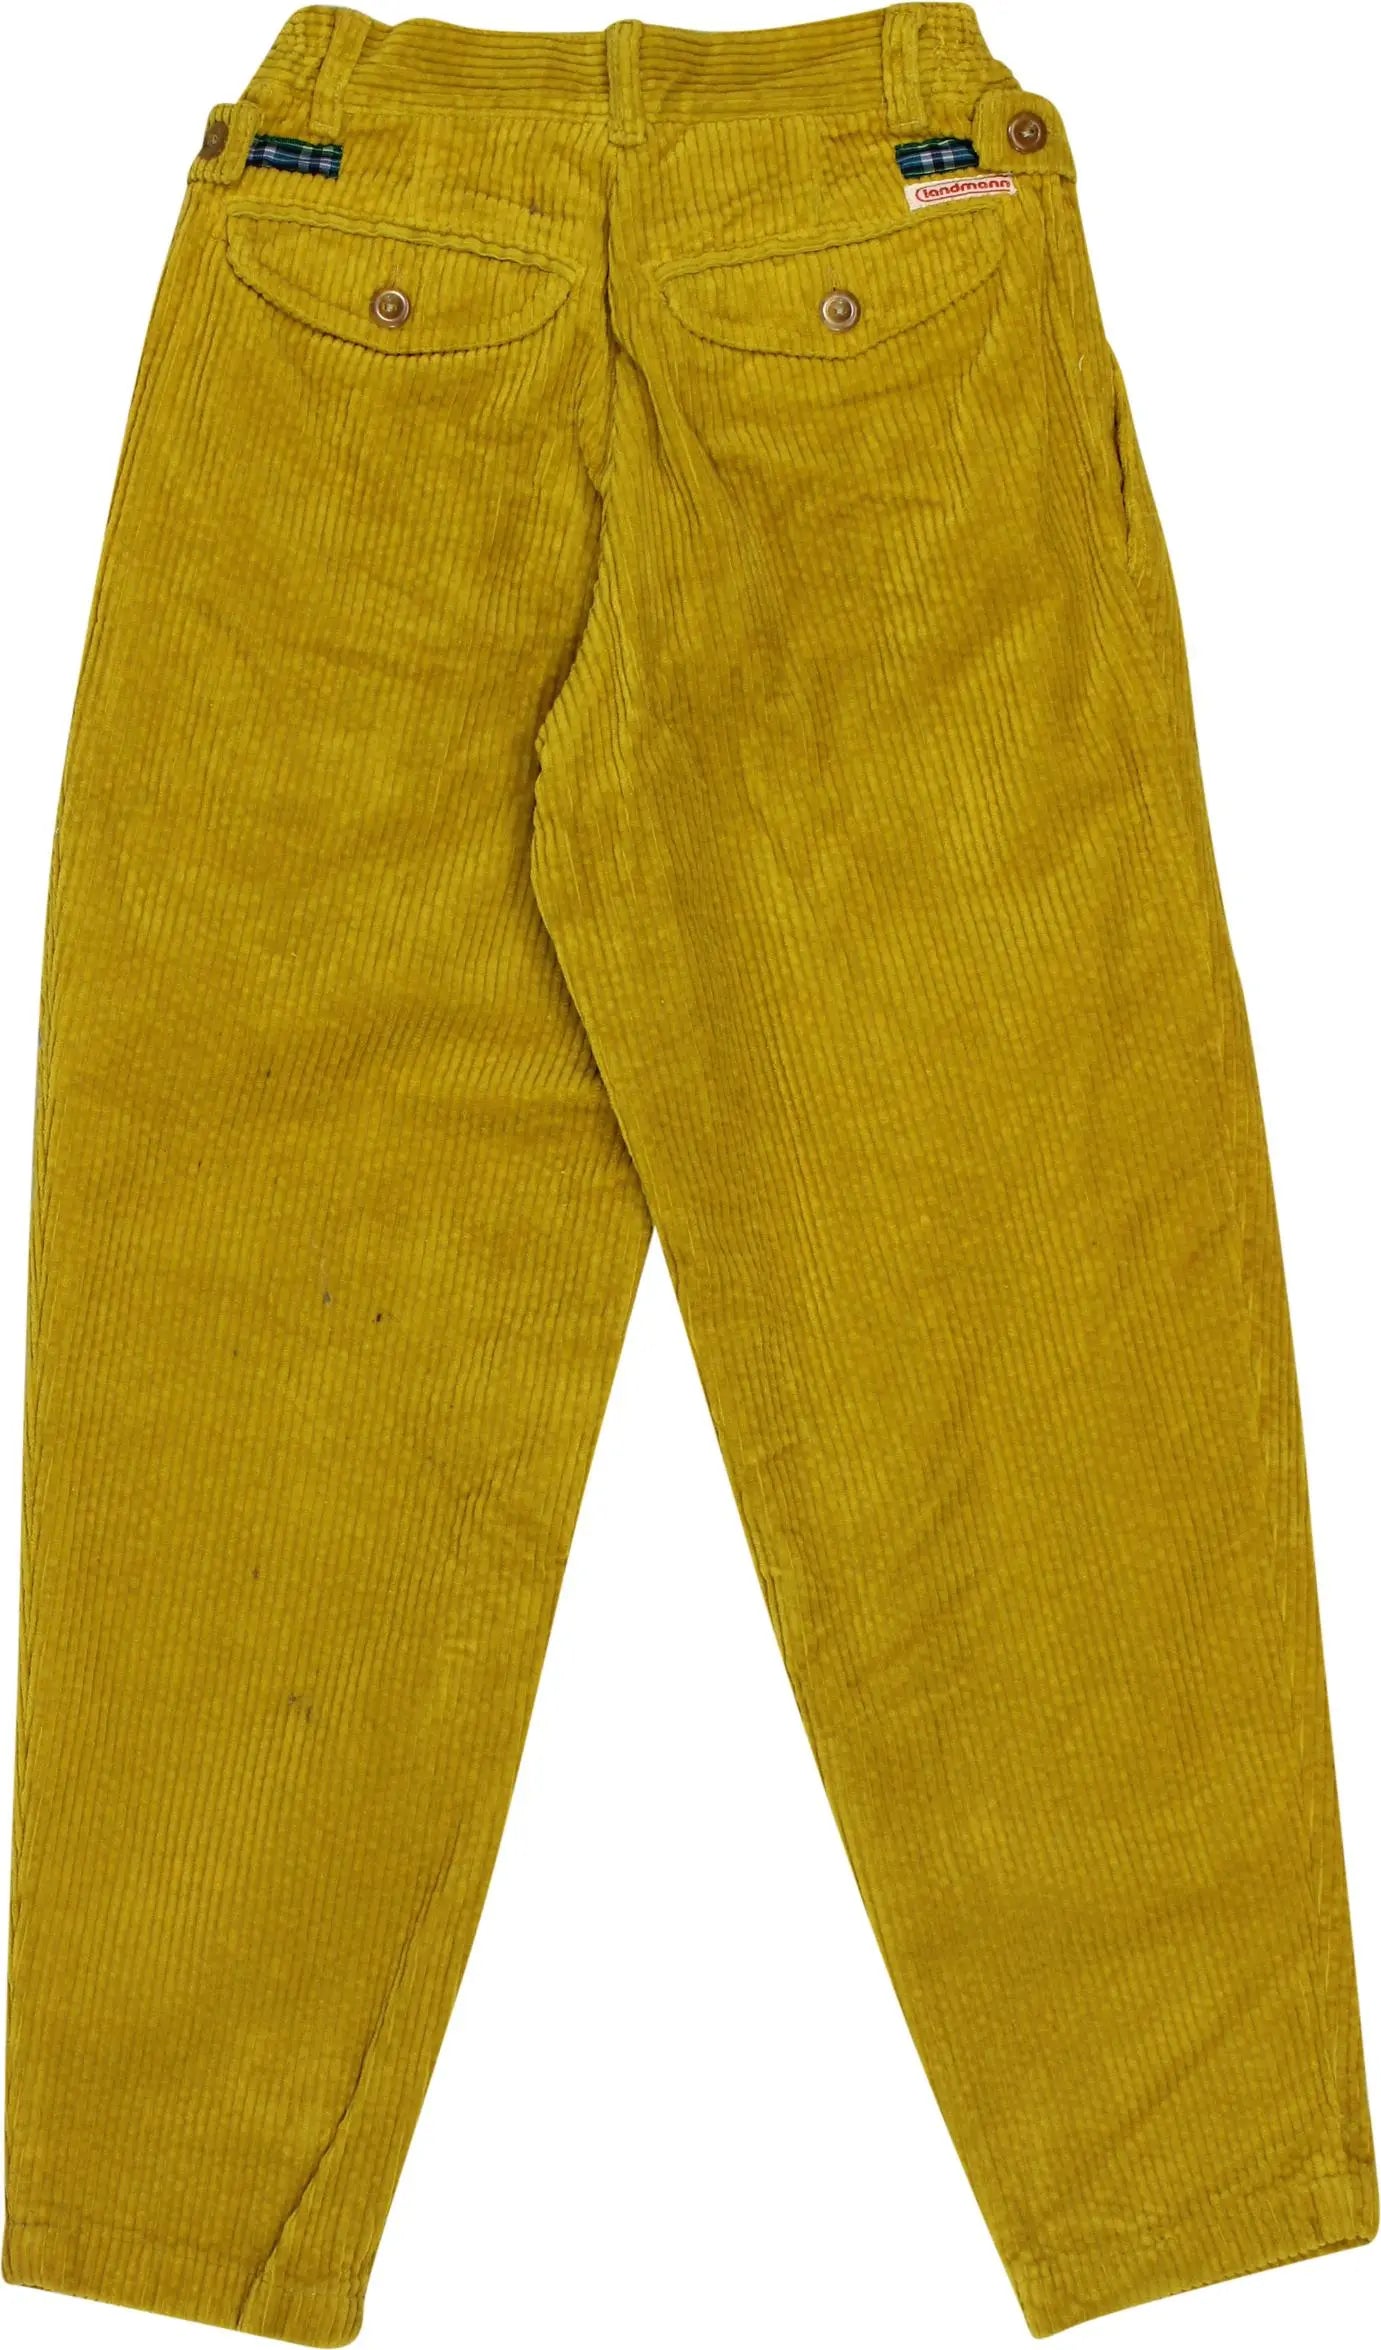 Landmann - Corduroy Pants- ThriftTale.com - Vintage and second handclothing